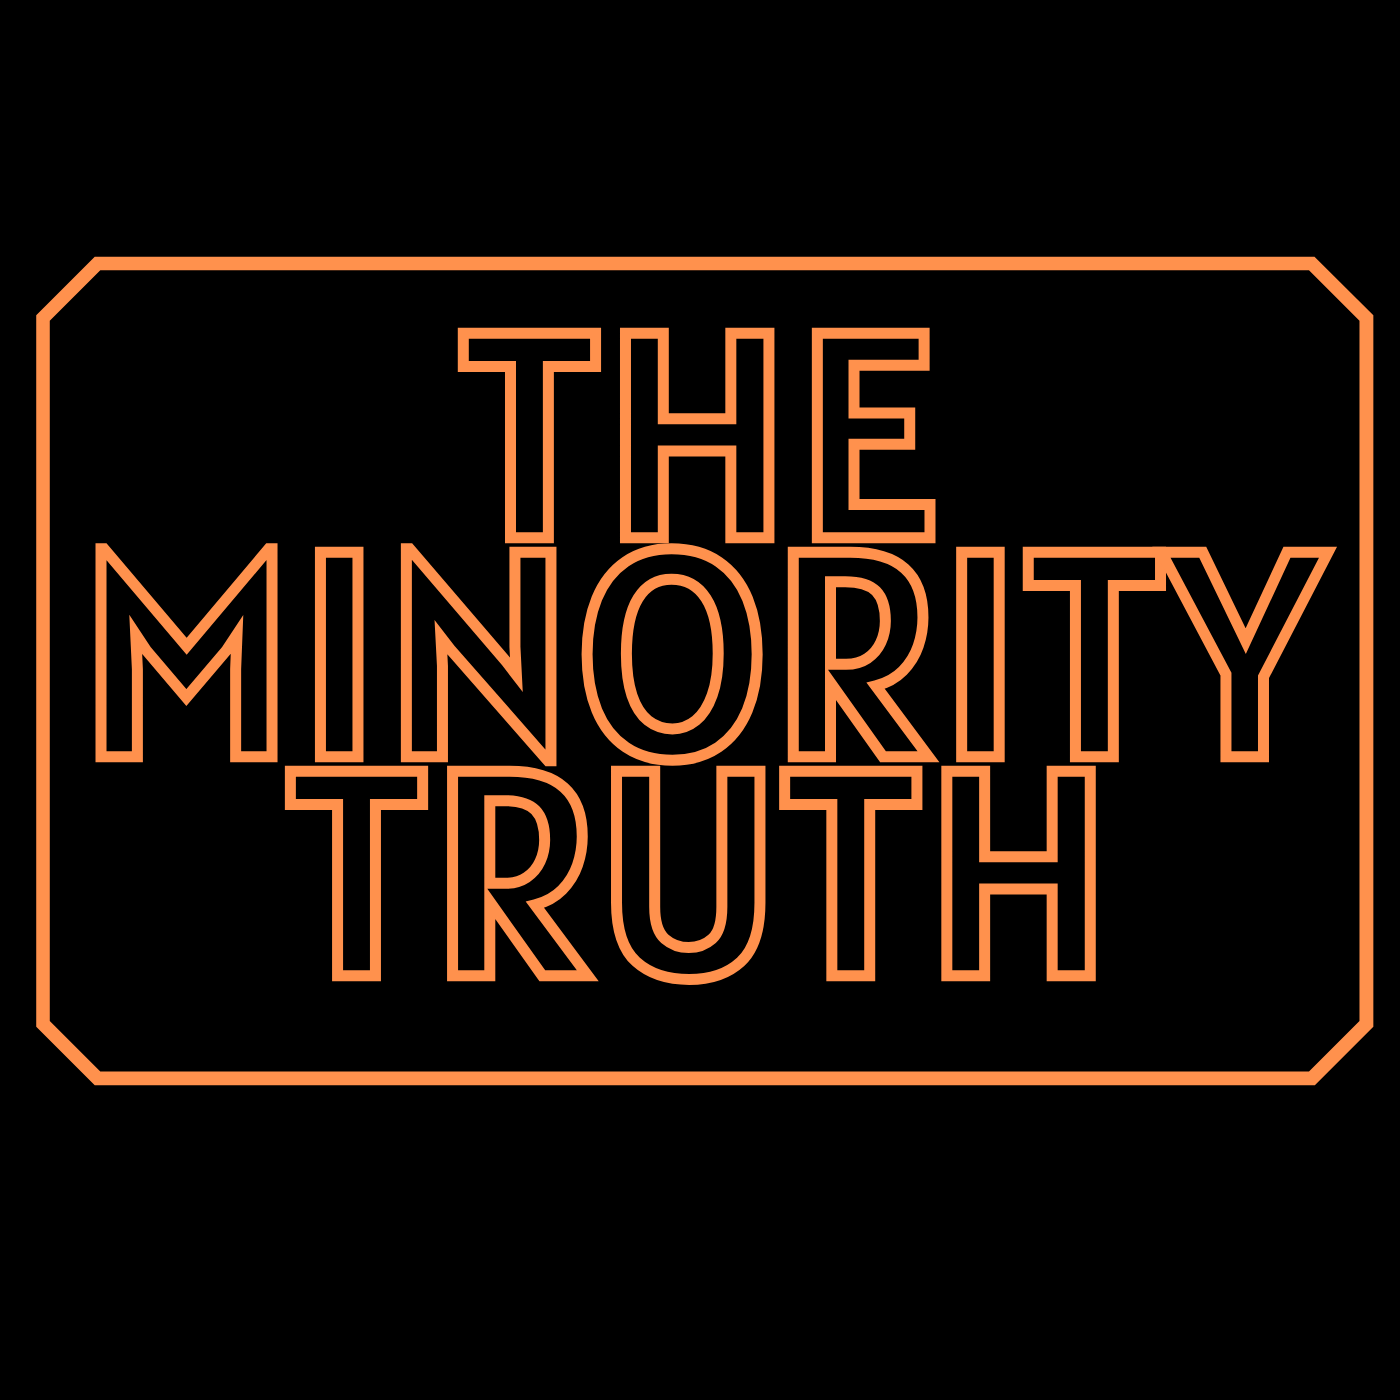 The minorities patreon